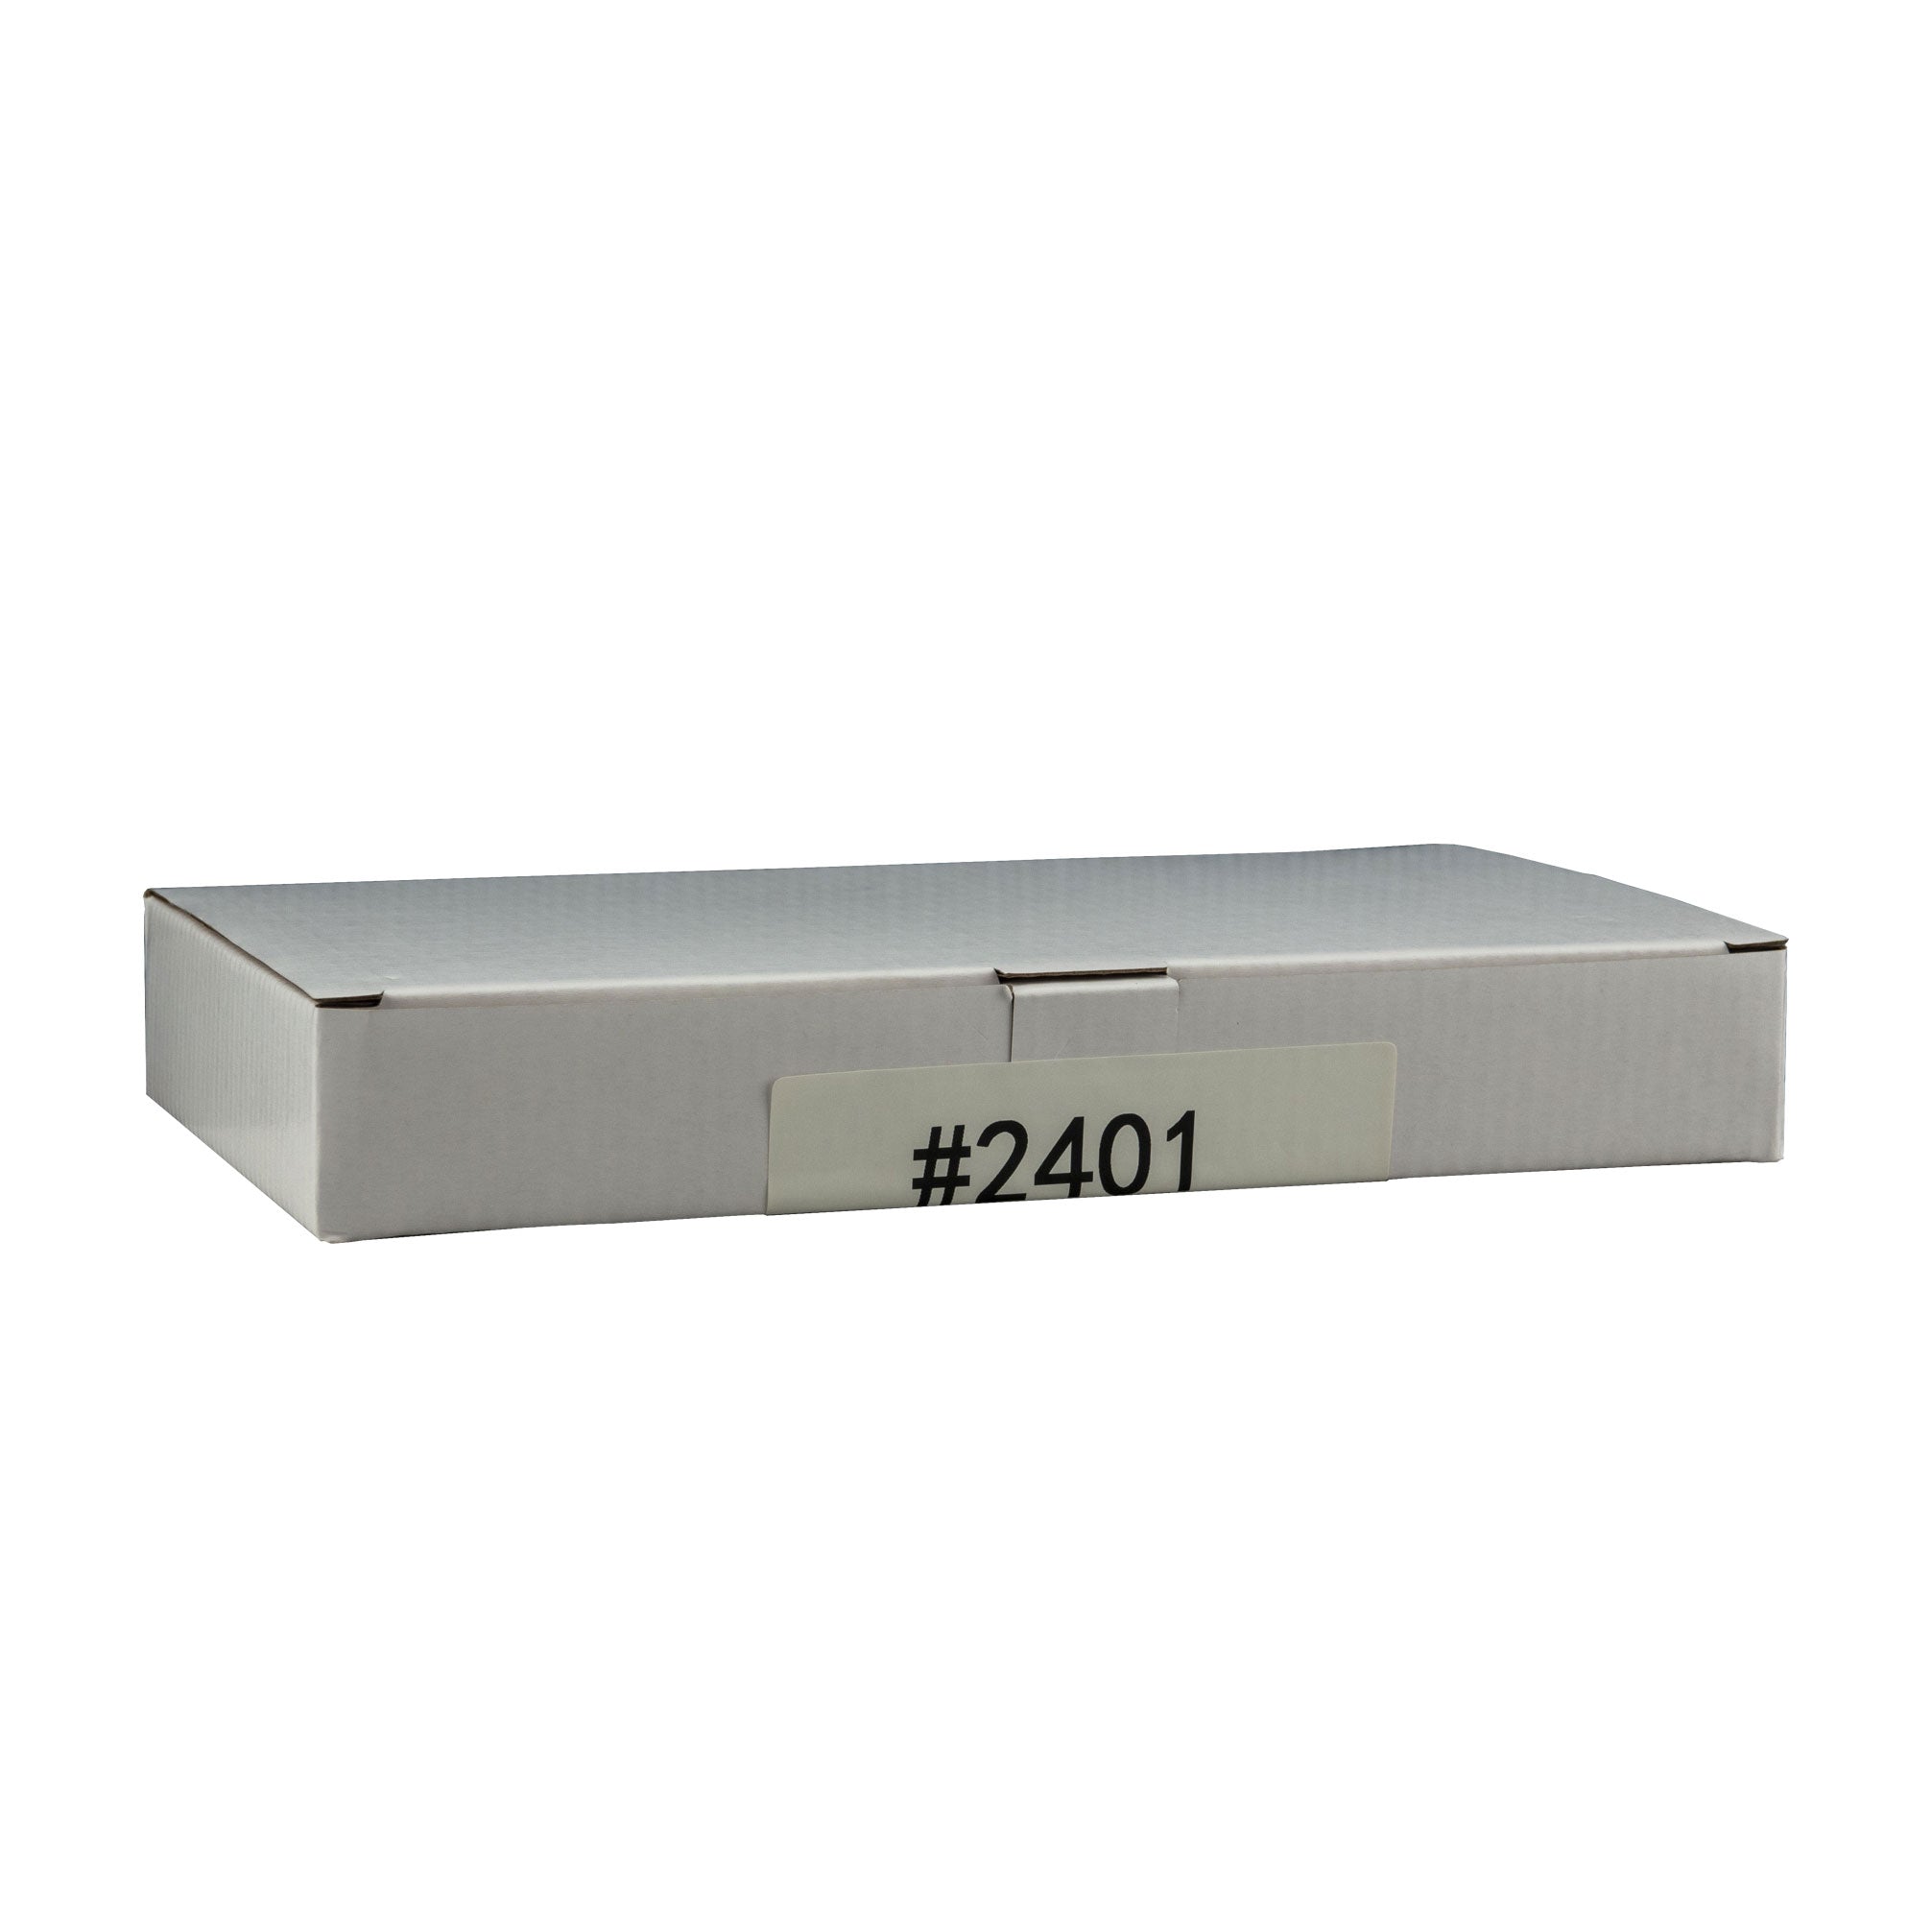 240mm x 145mm x 35mm White Carton Cardboard Shipping Box (#2401)